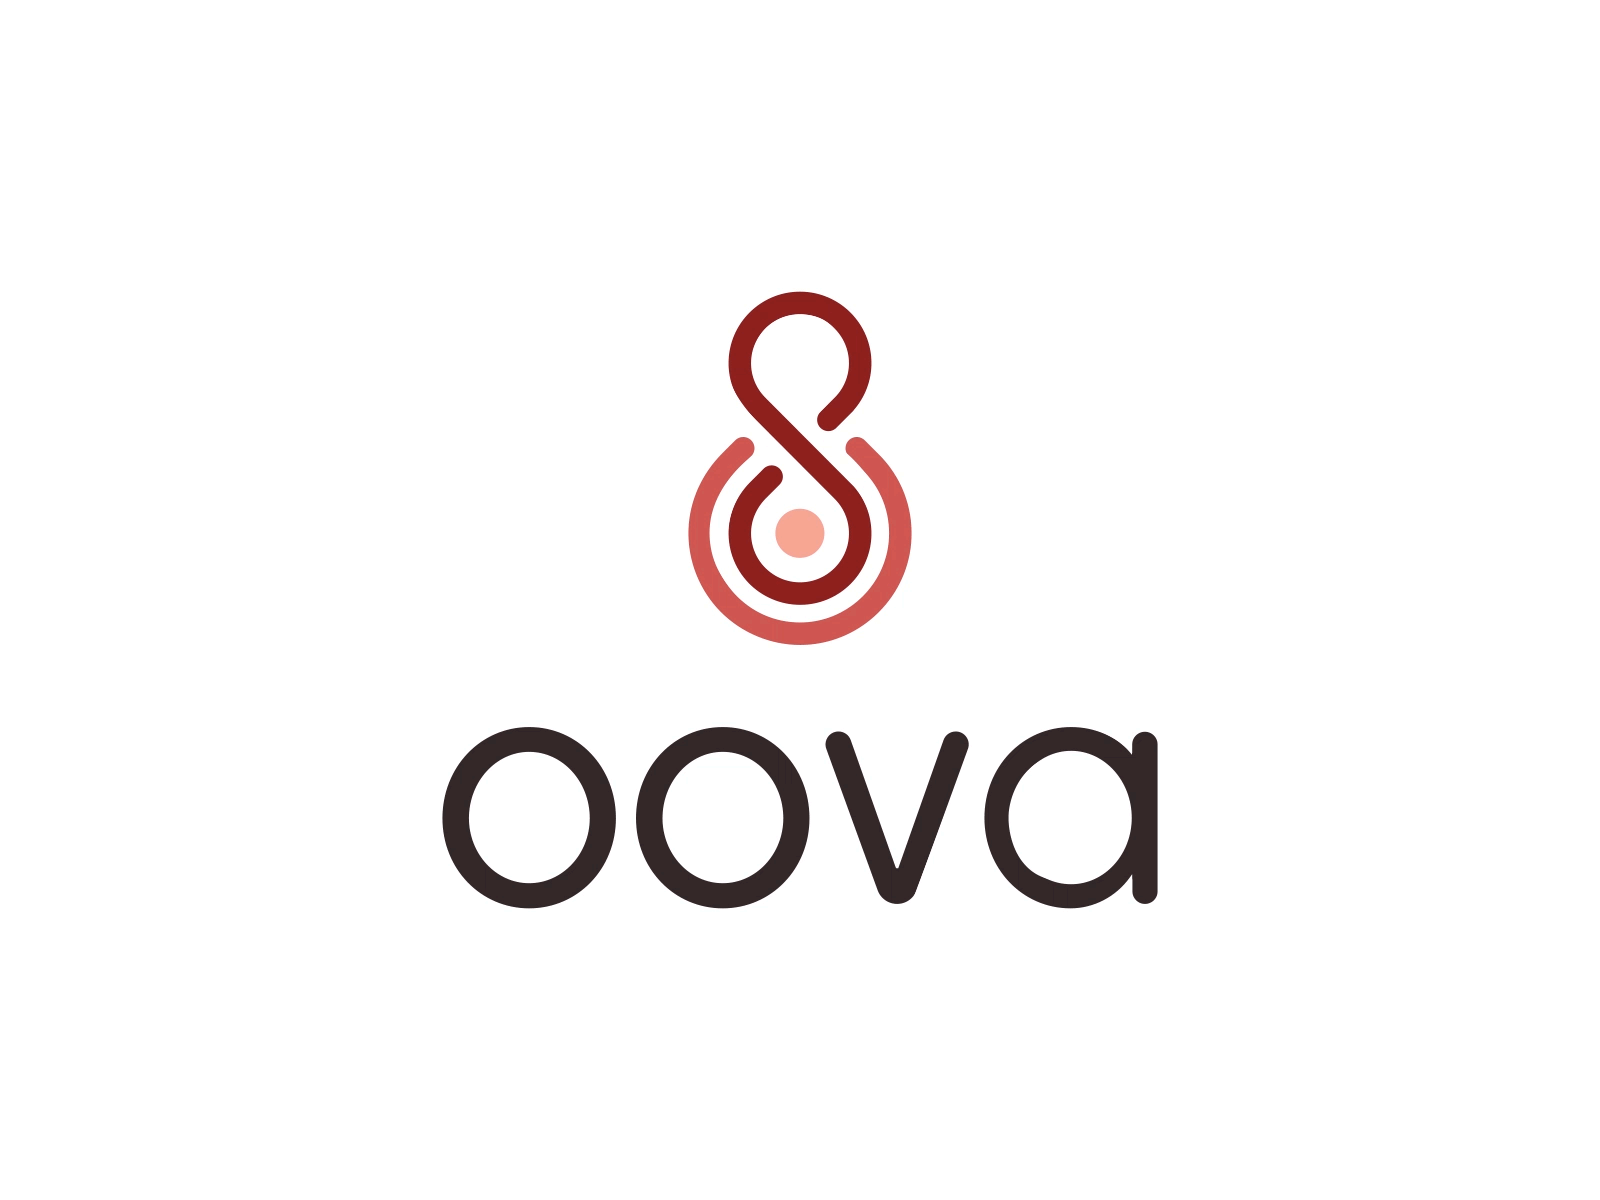 OOVA logo animation